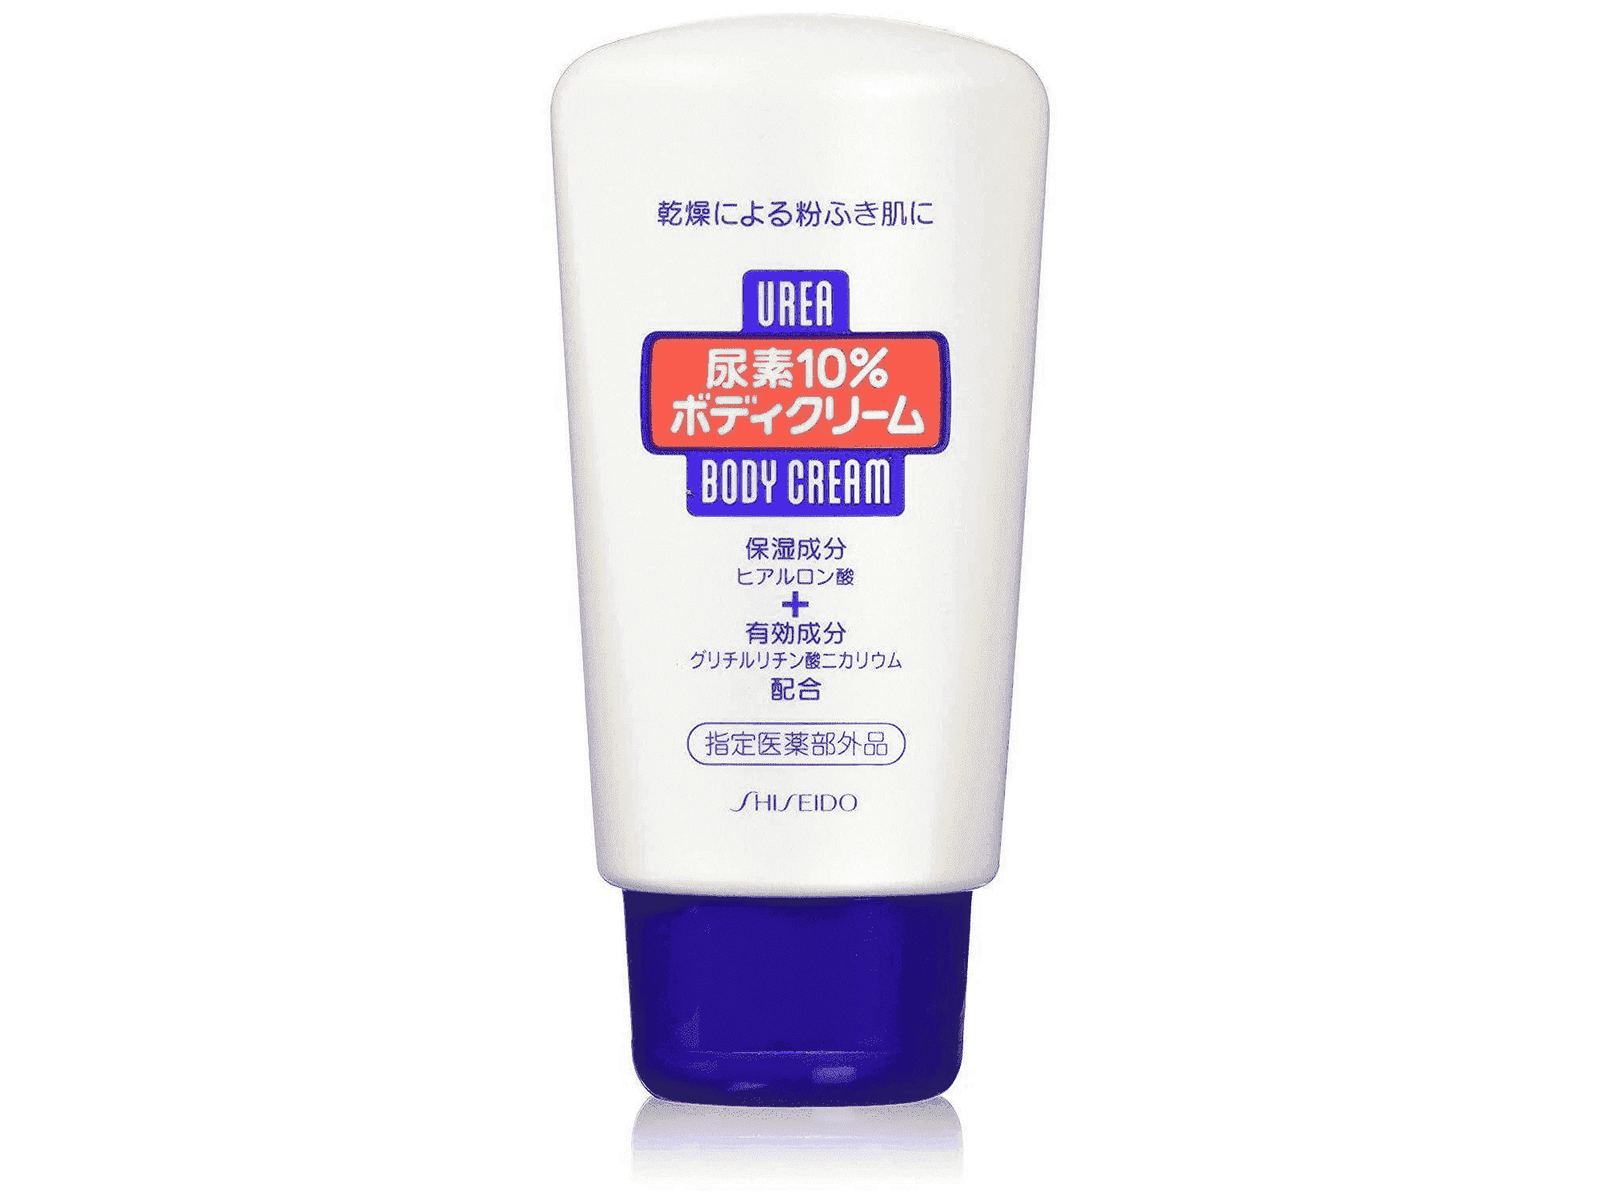 Shiseido Urea Body Cream Moisturizer